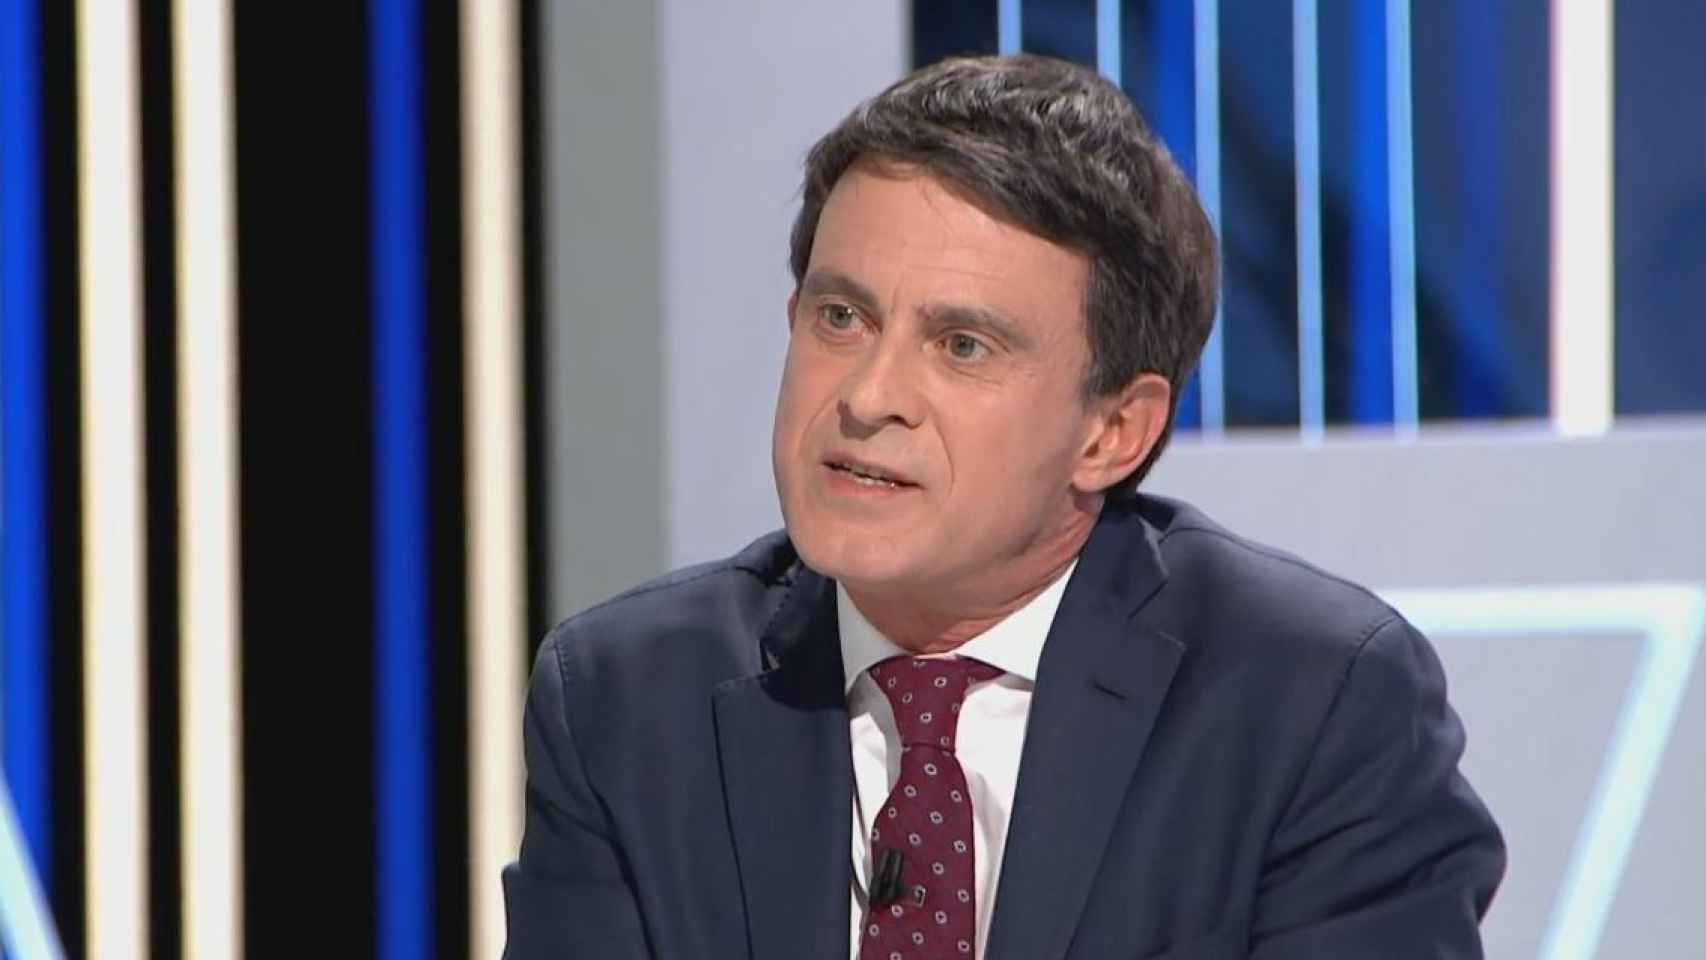 El candidato a al alcaldía, Manuel Valls